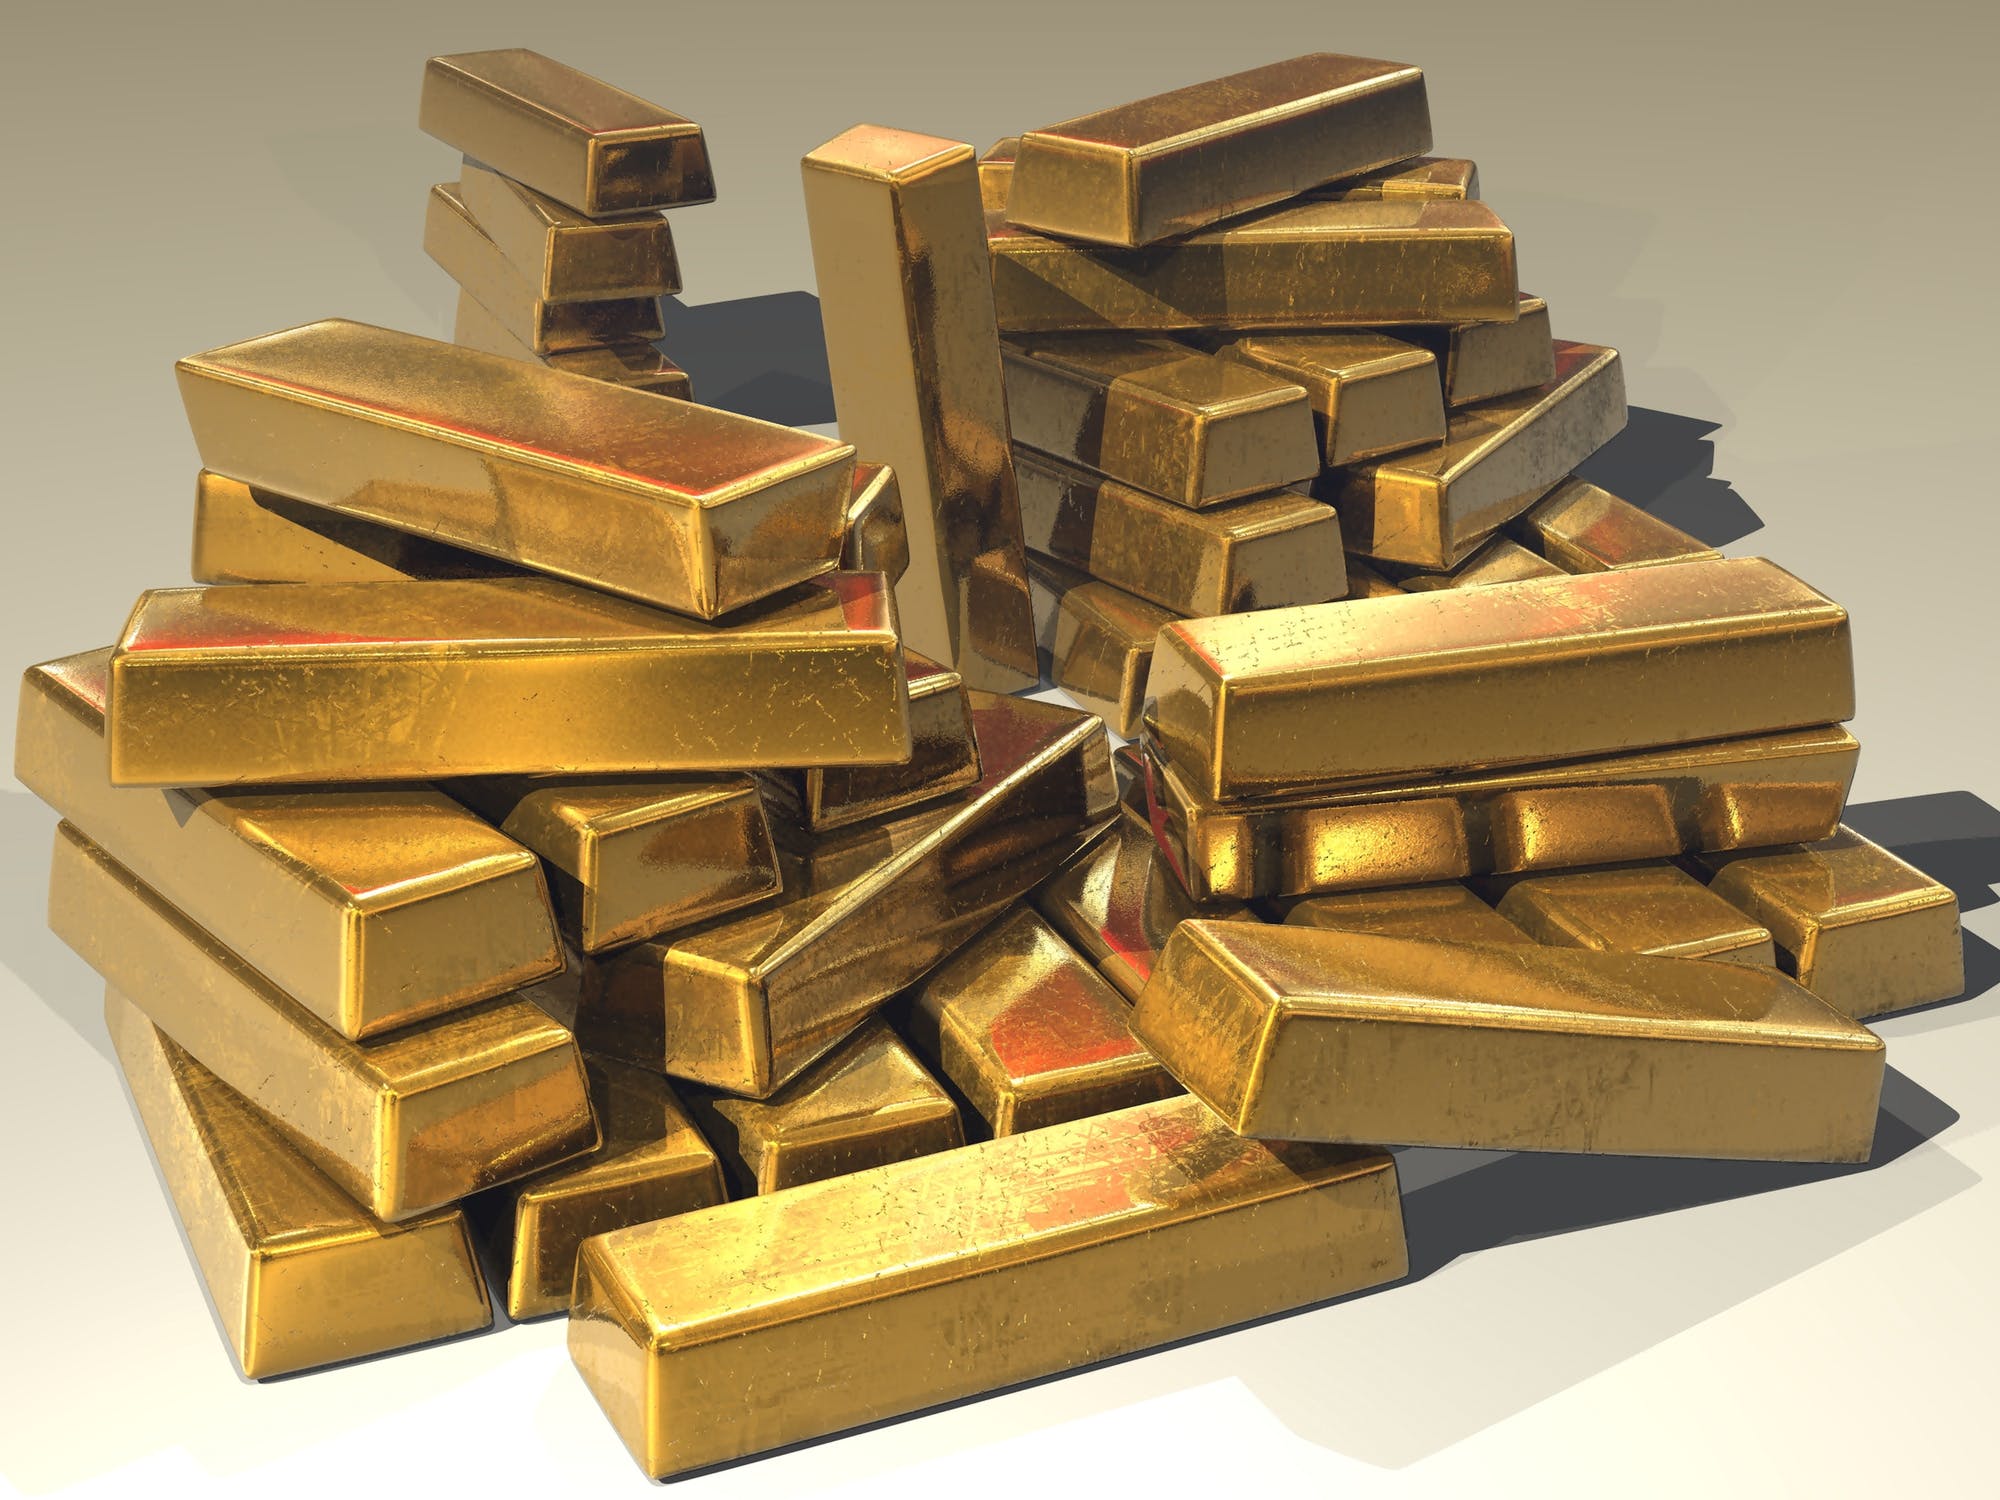 Are Precious Metals Worth Investing In?